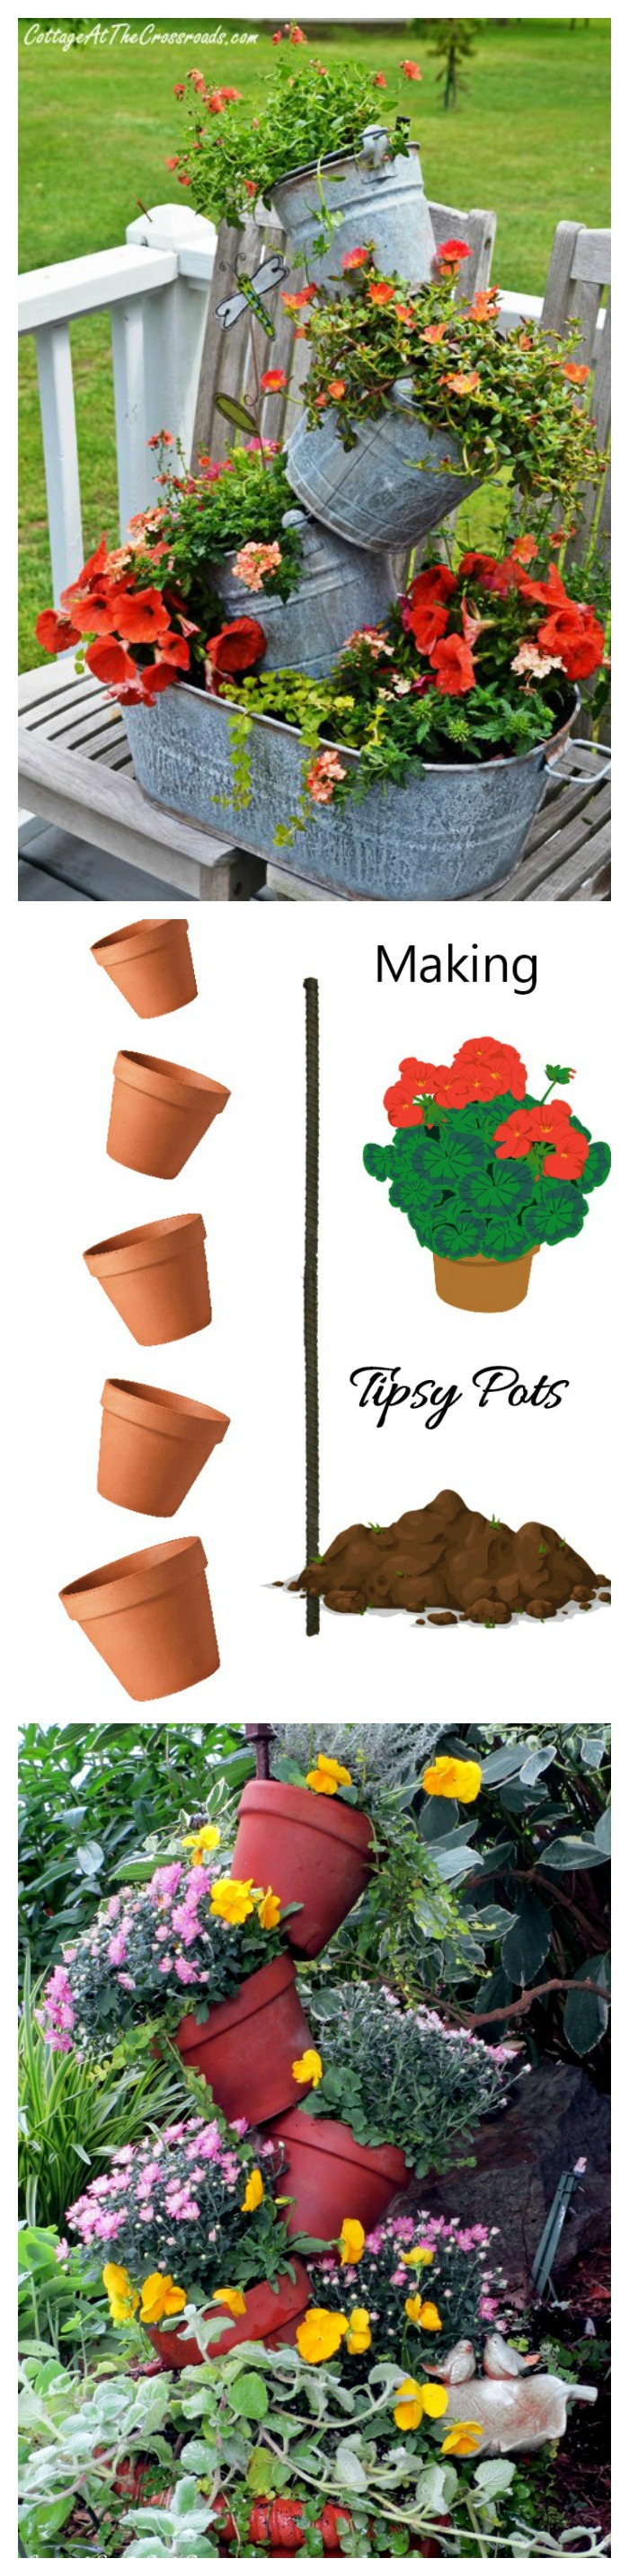 Parhaat Topsy Turvy Planters - Luova puutarhanhoito Tipsy Potit